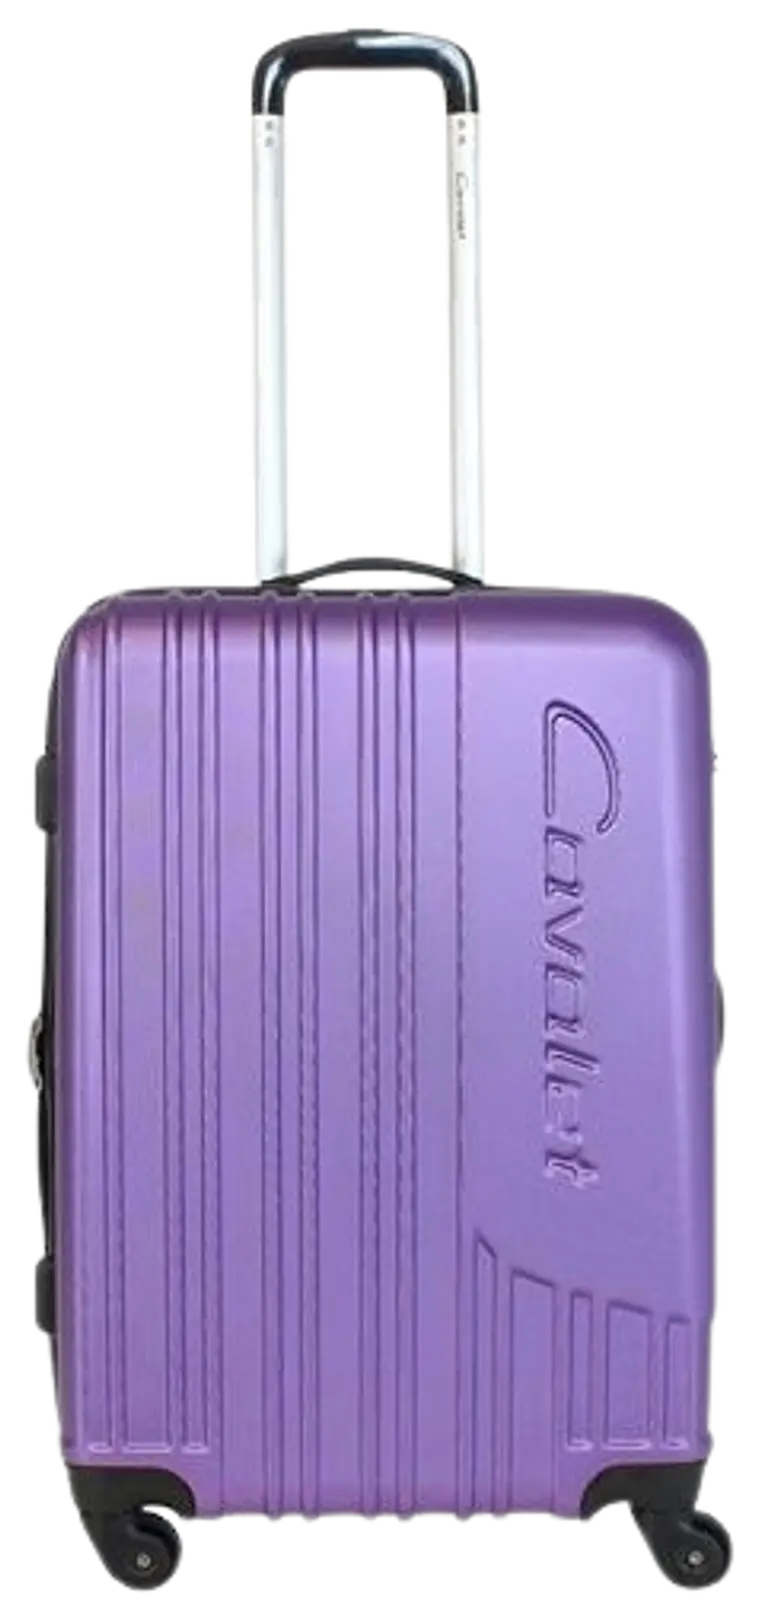 Cavalet Malibu matkalaukku M 64 cm, lila - 1